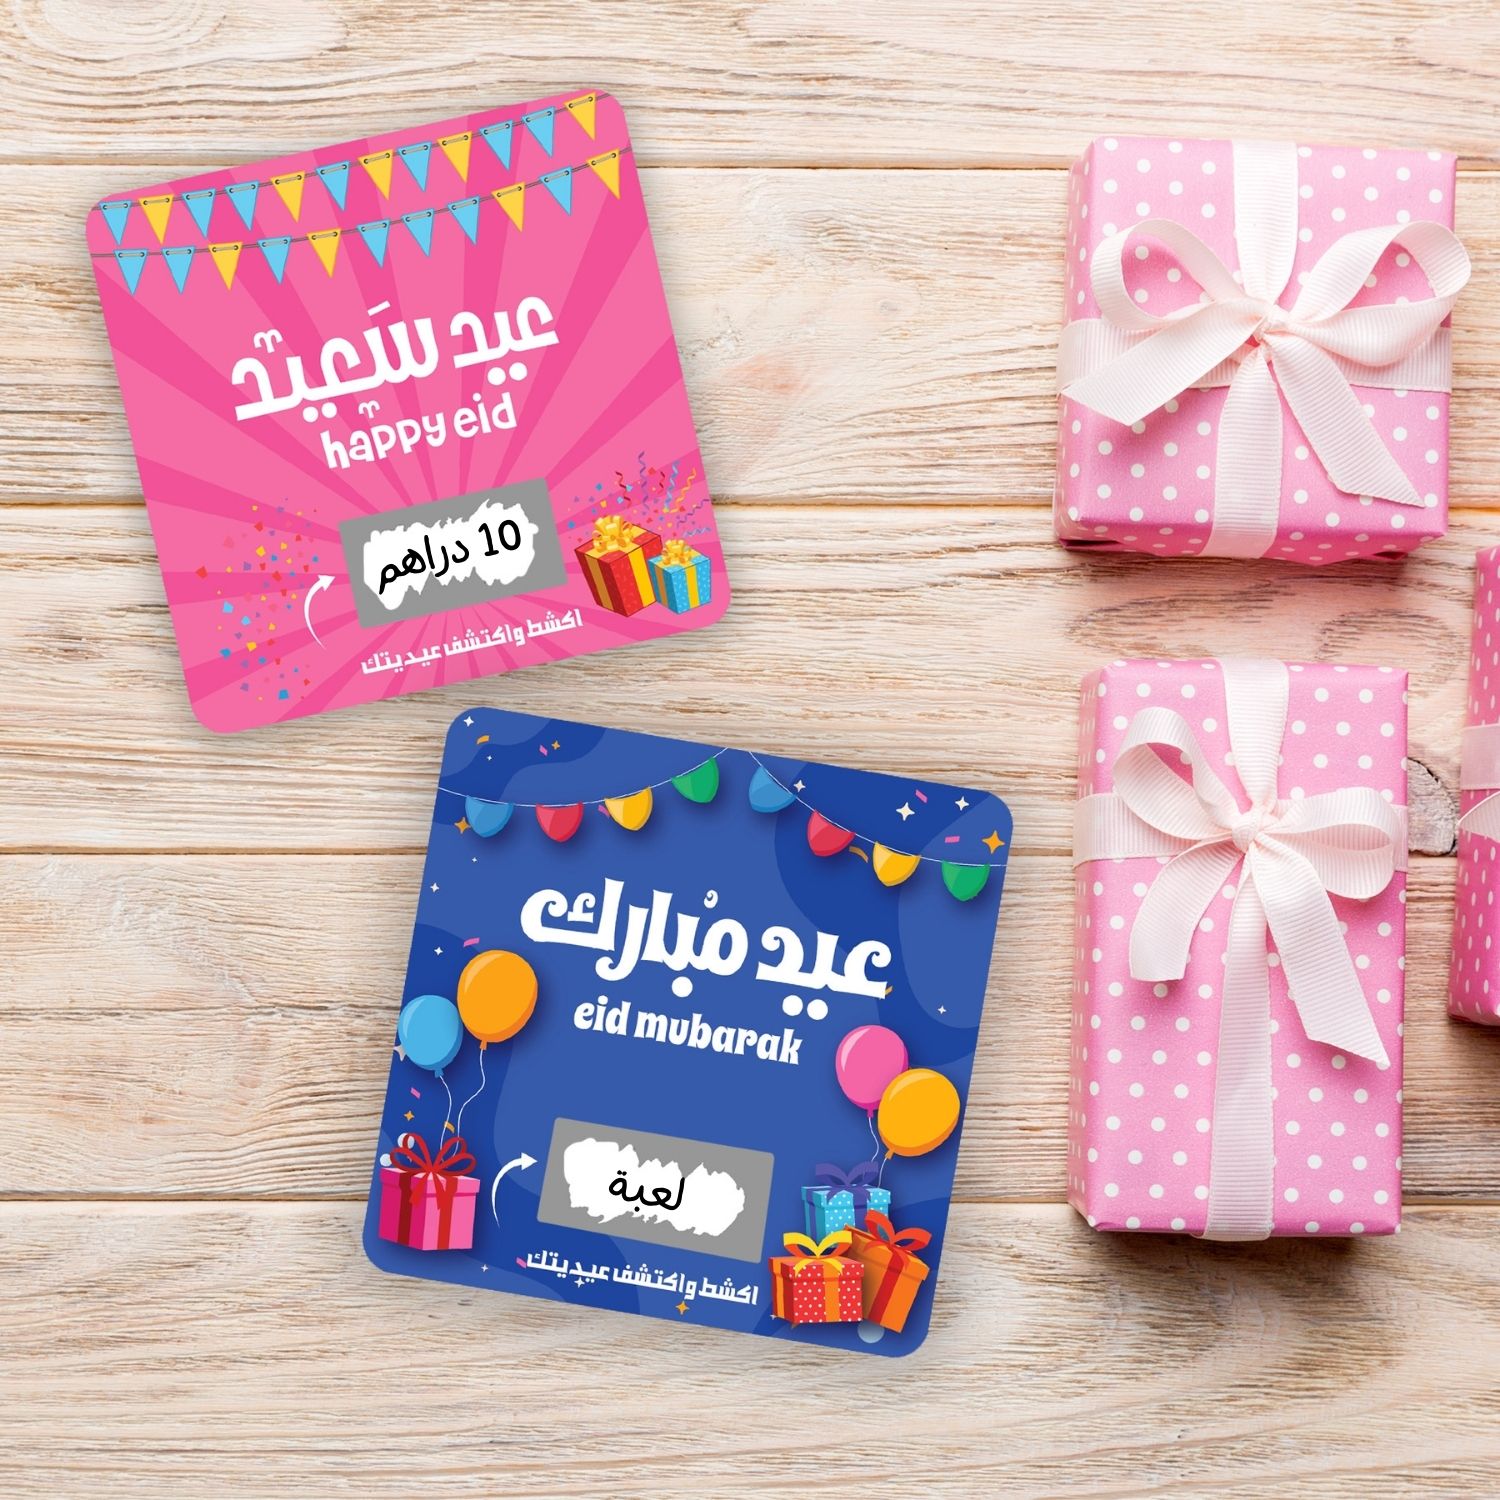 Eid Surprise Cards, Scratch-Off Stickers - 20 Cards